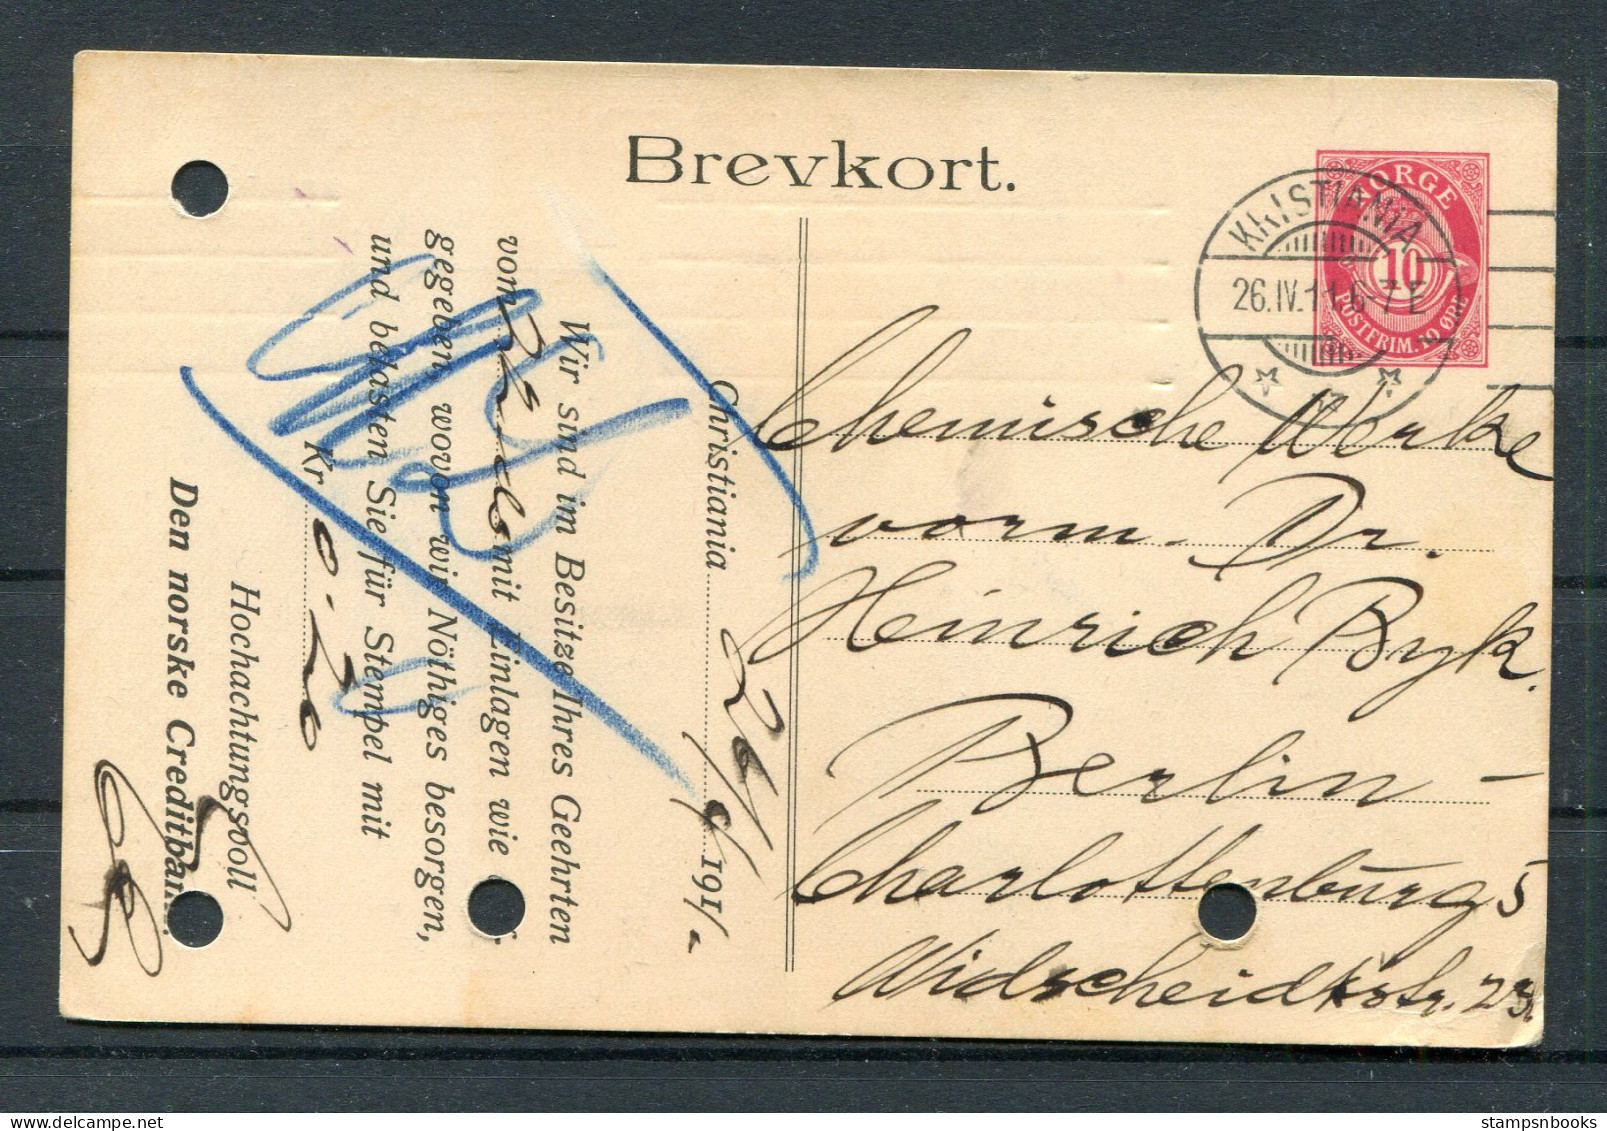 1911 Den Norsk Creditbank, Christiania Private 10ore Stationery Postcard, Privat Brevkort - Berlin Germany - Brieven En Documenten